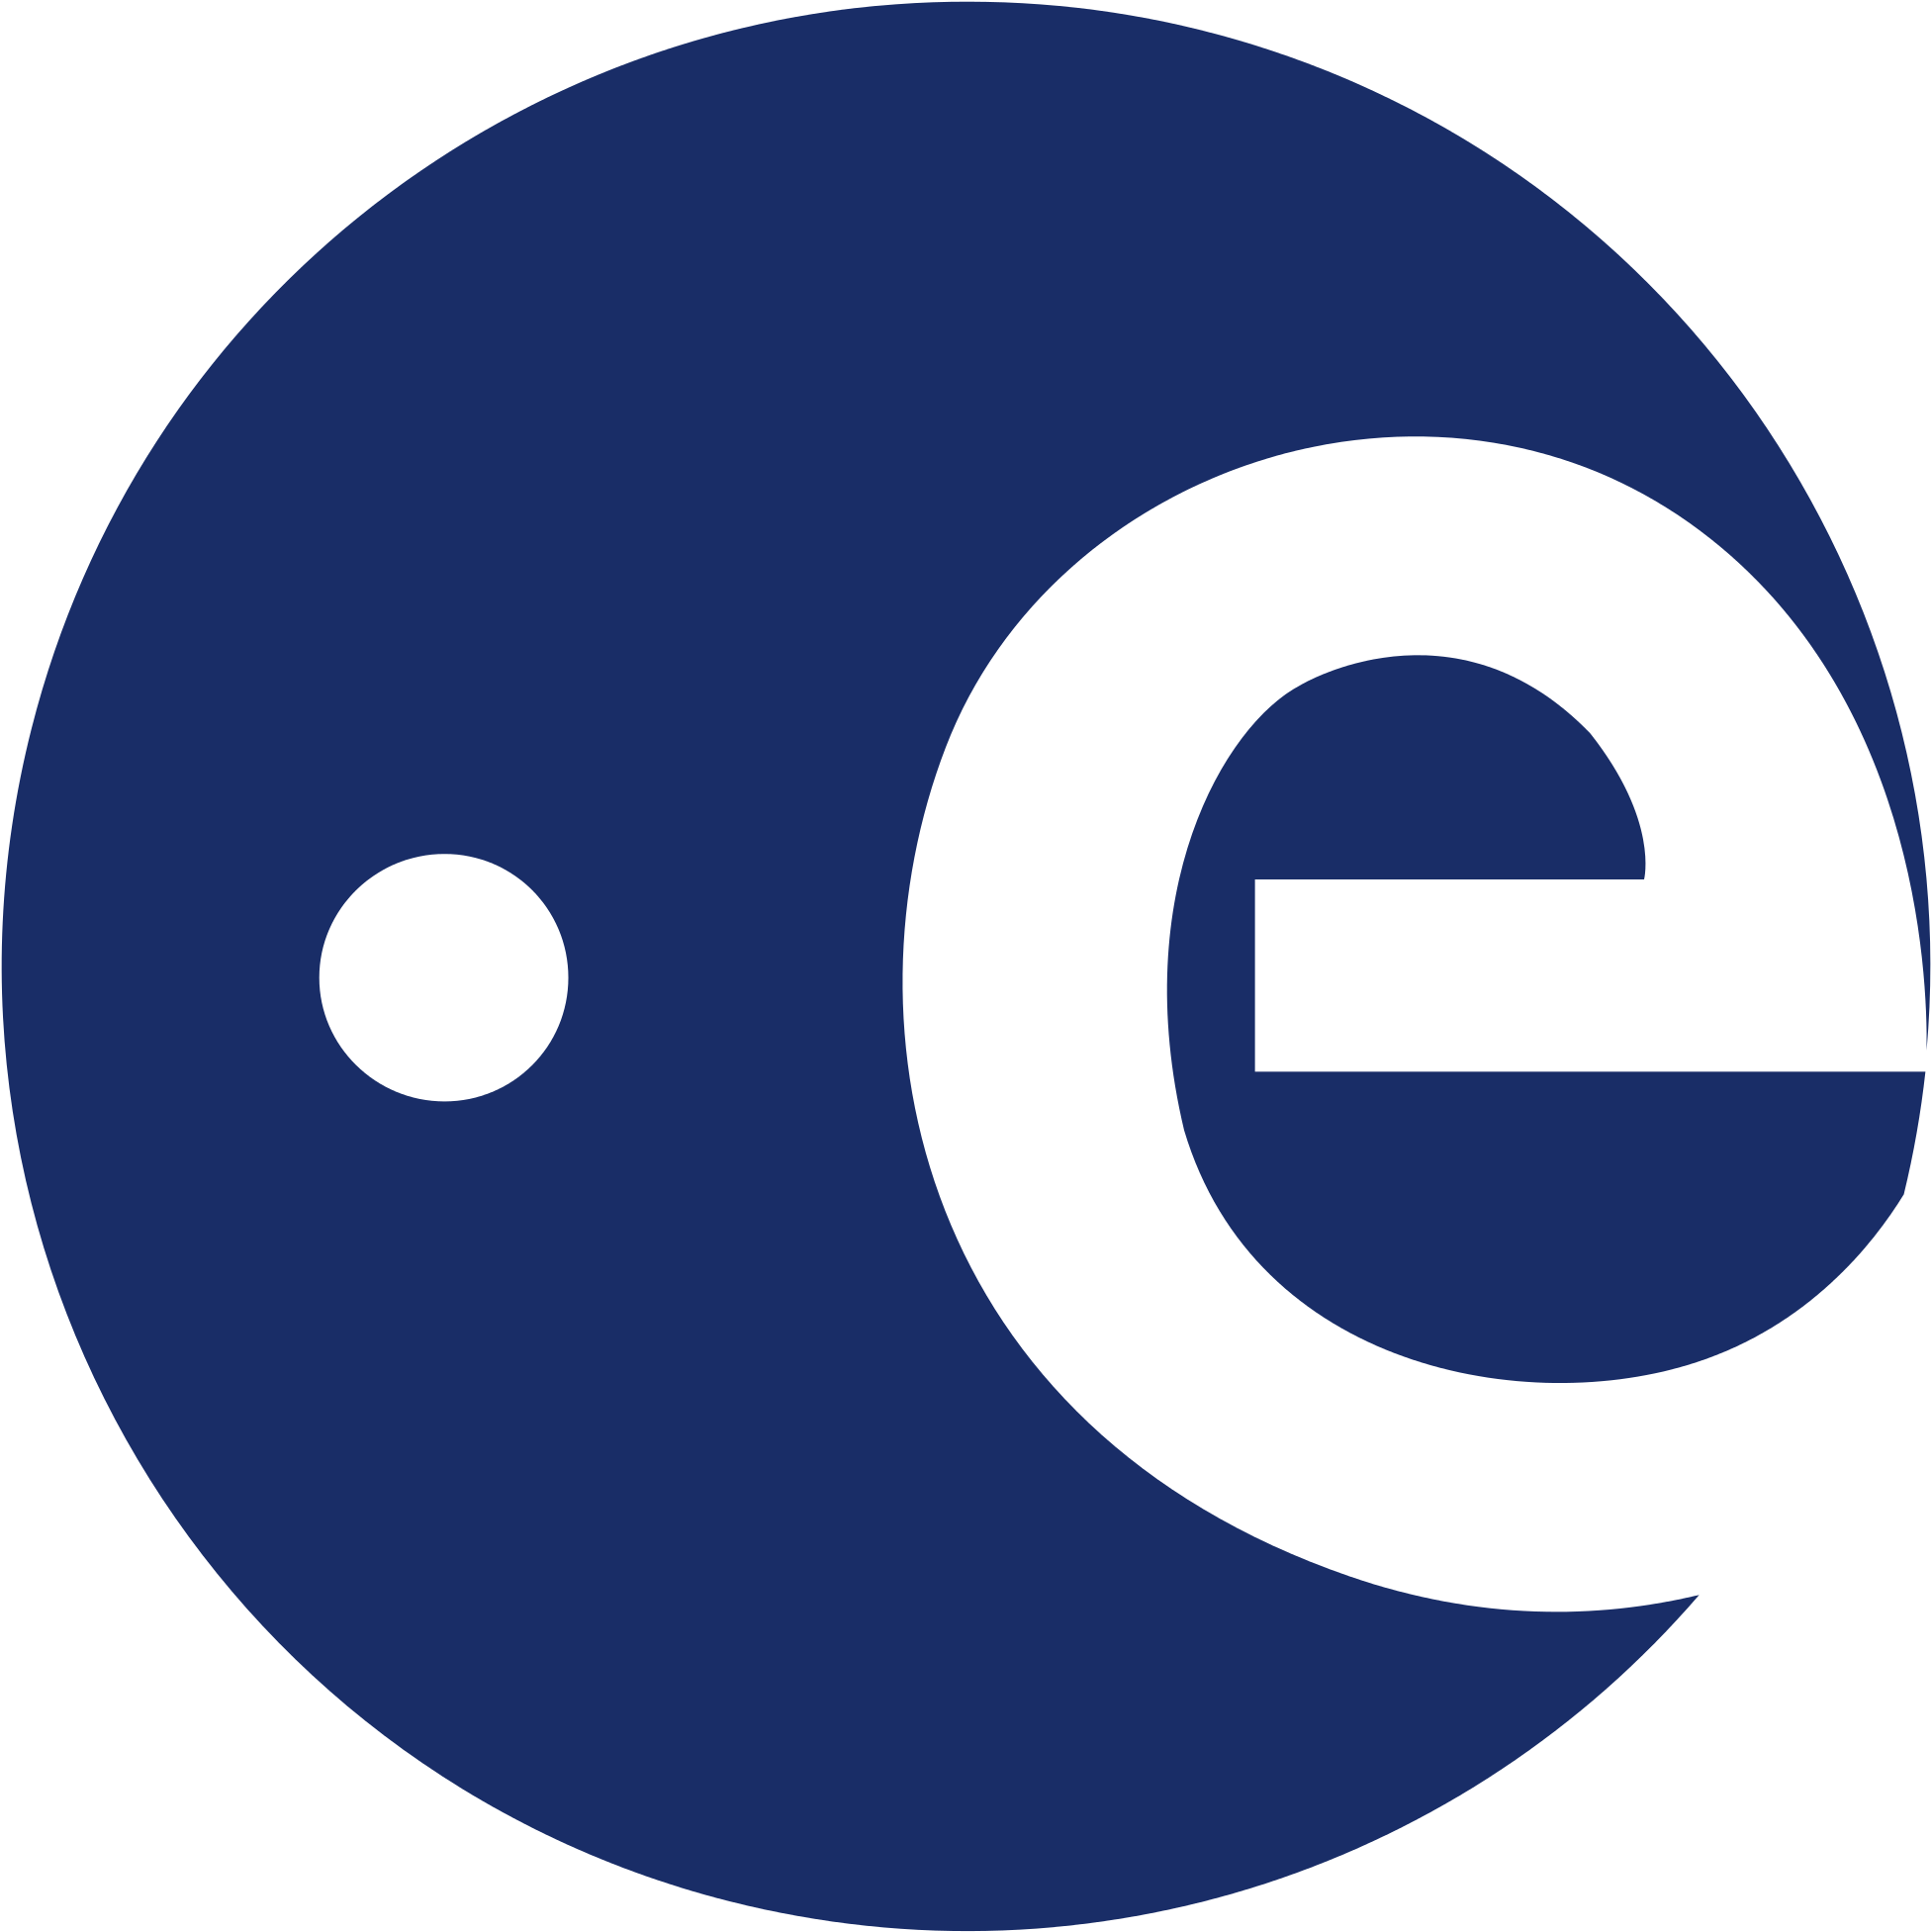 Open - Logo De La Agencia Espacial Europea (2000x2000), Png Download